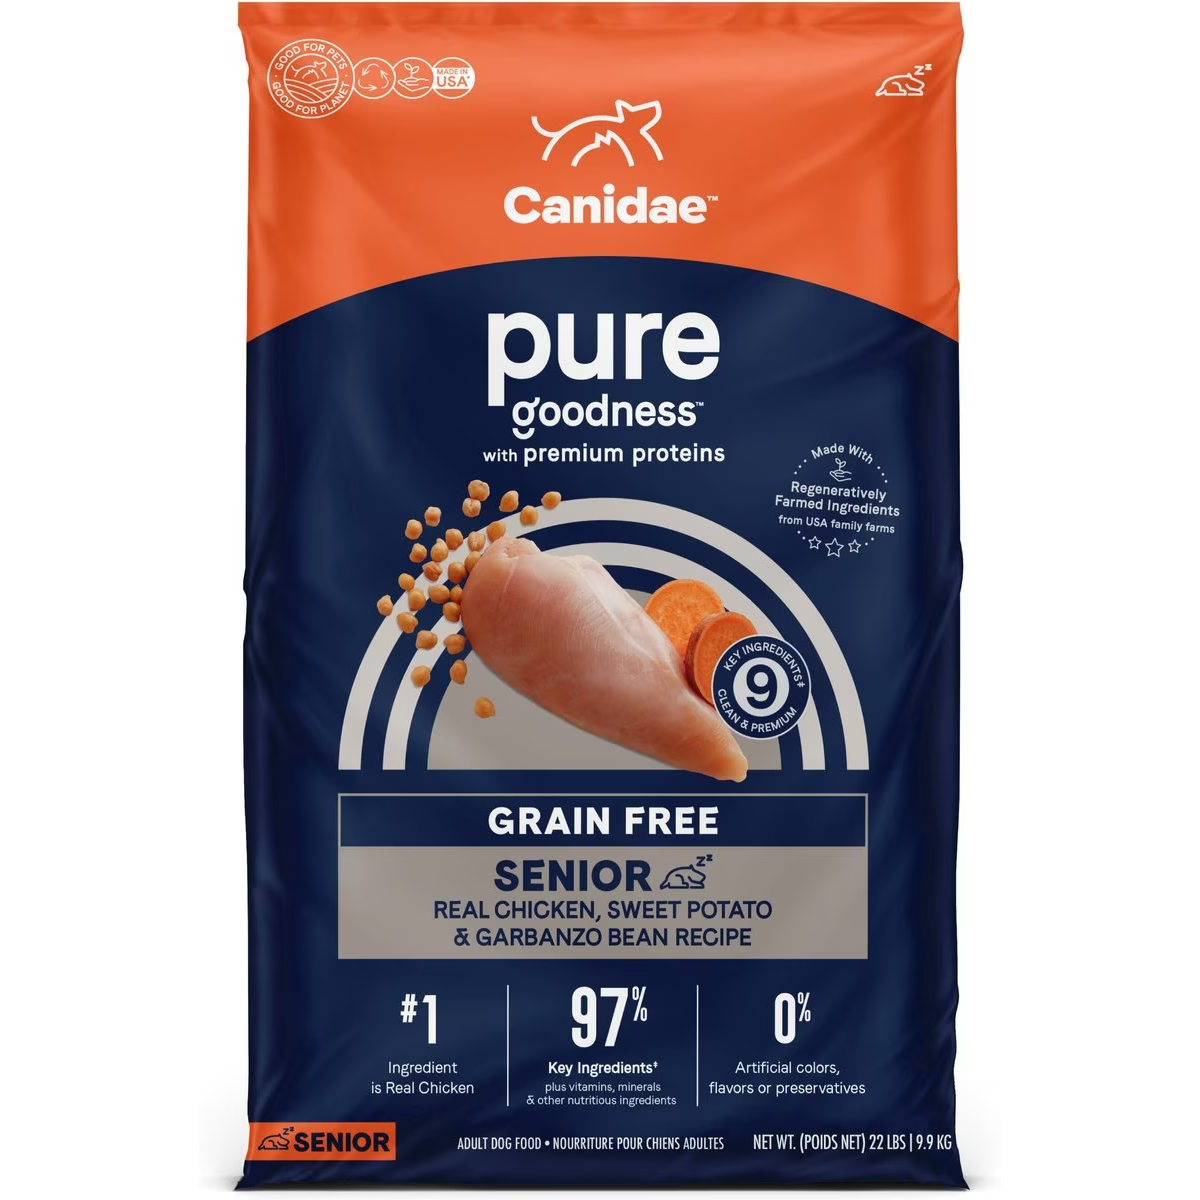 Canidae Grain-Free Pure Goodness Senior Dog Food